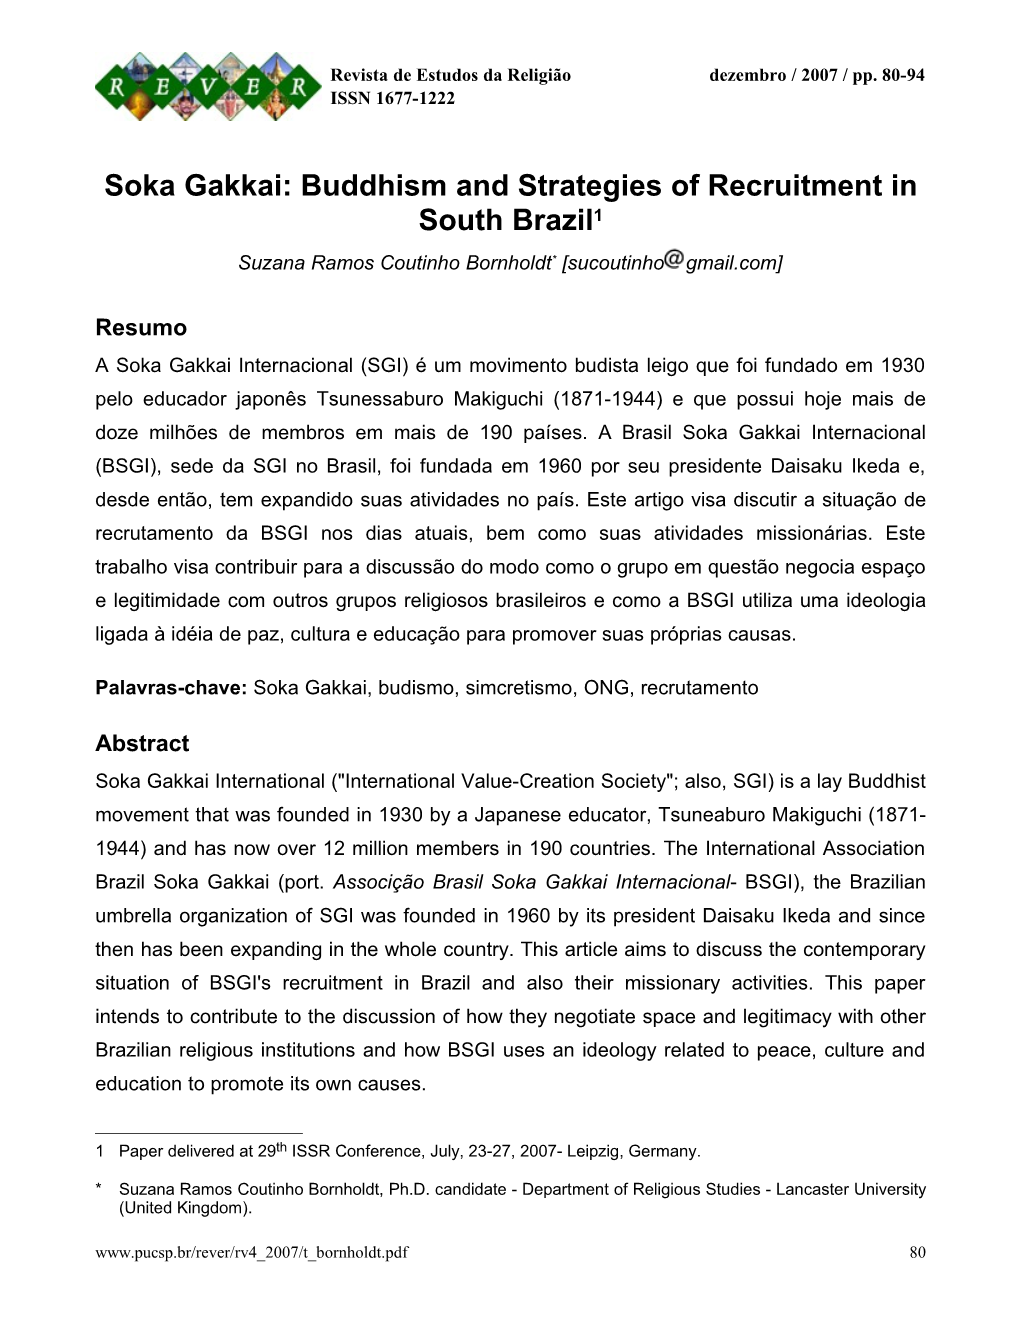 Soka Gakkai: Buddhism and Strategies of Recruitment in South Brazil1 Suzana Ramos Coutinho Bornholdt* [Sucoutinho Gmail.Com]